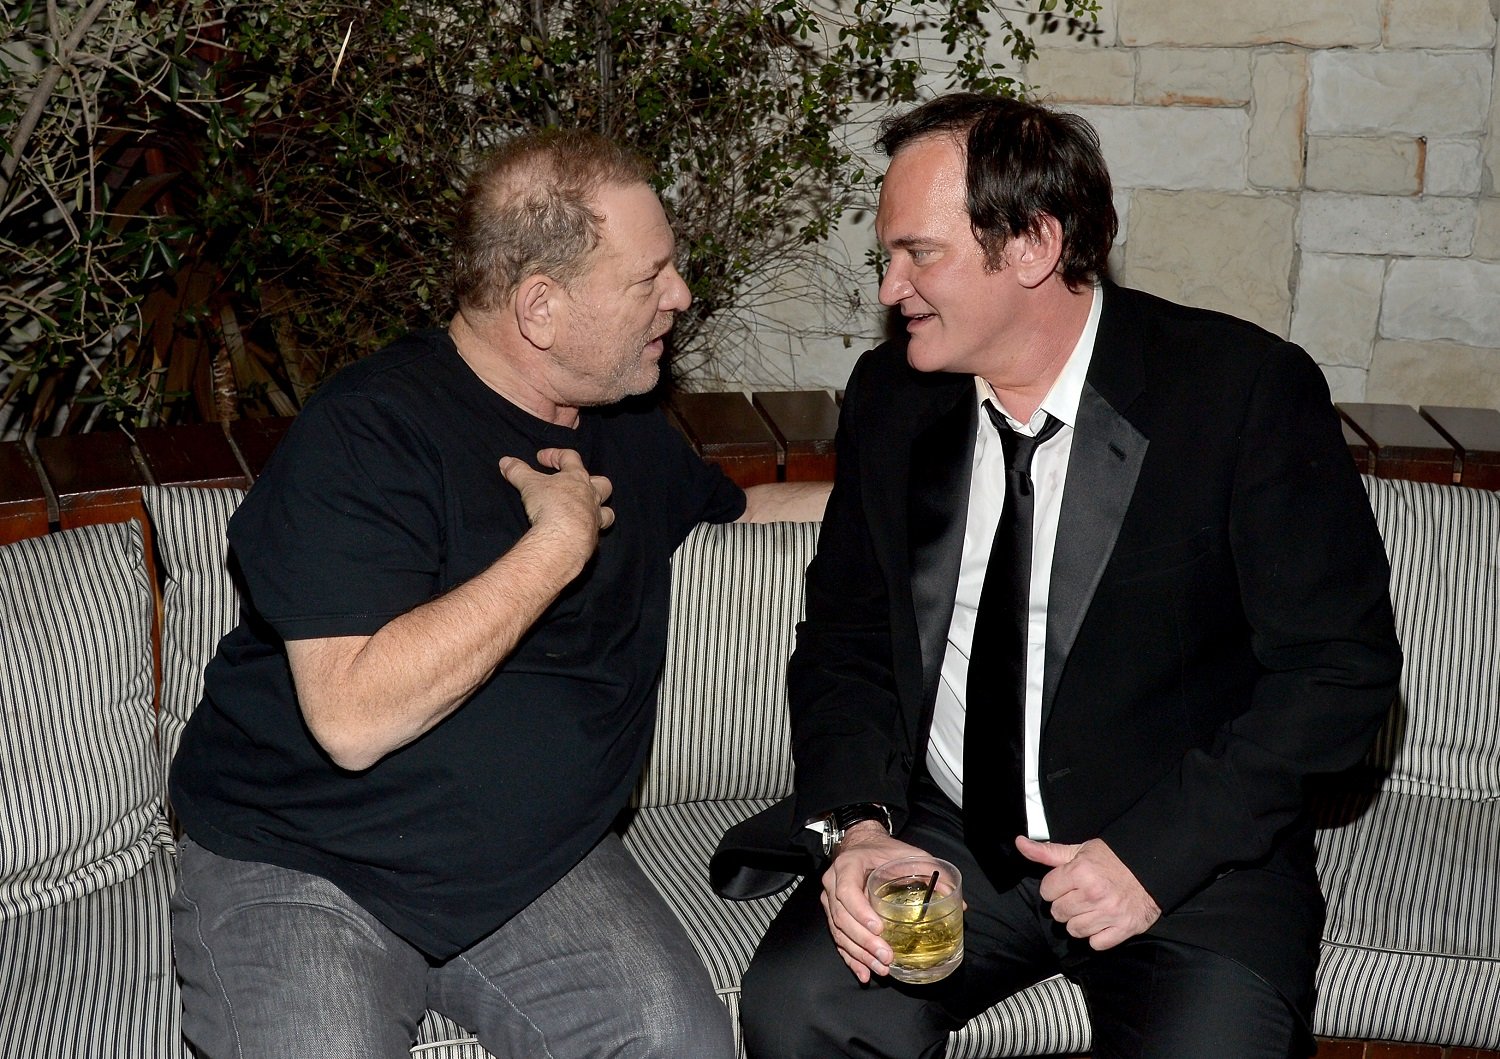 Quentin Tarantino and Harvey Weinstein in 2015 